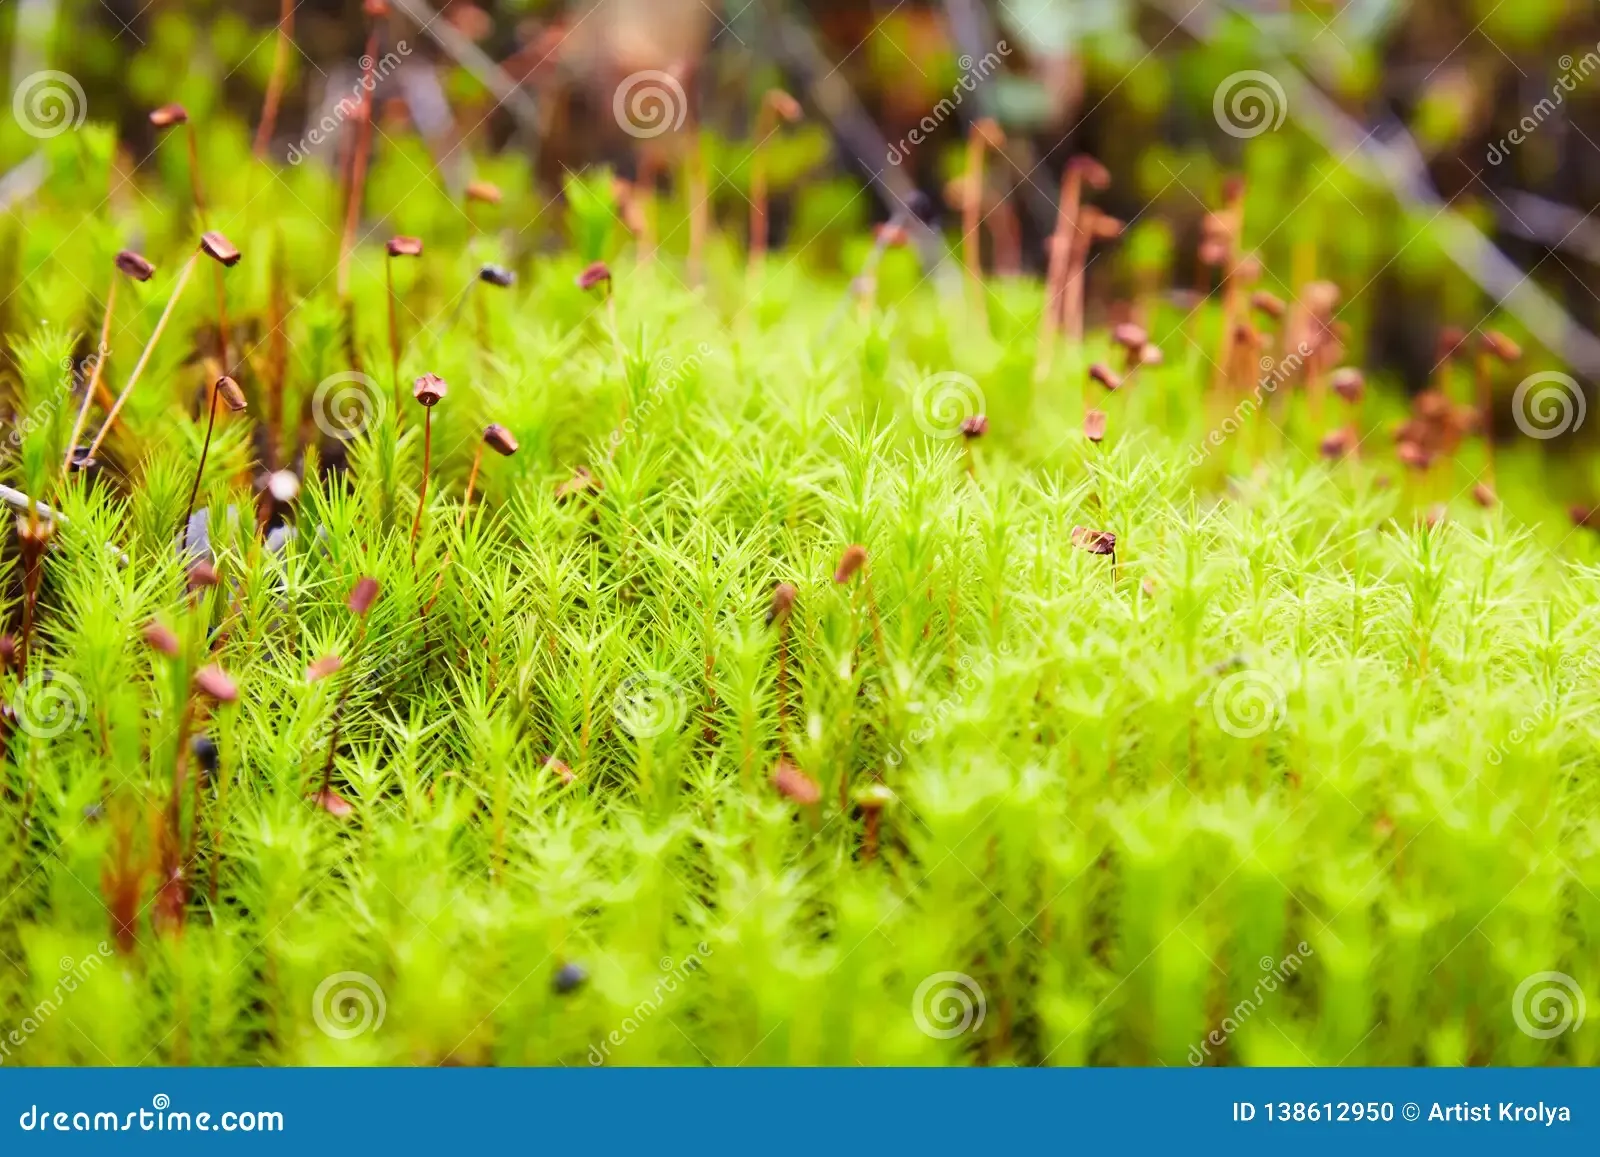 green-moss-polytrichum-commune-growing-forest-summer-selective-focus-green-moss-polytrichum-commune-growing-138612950.jpg